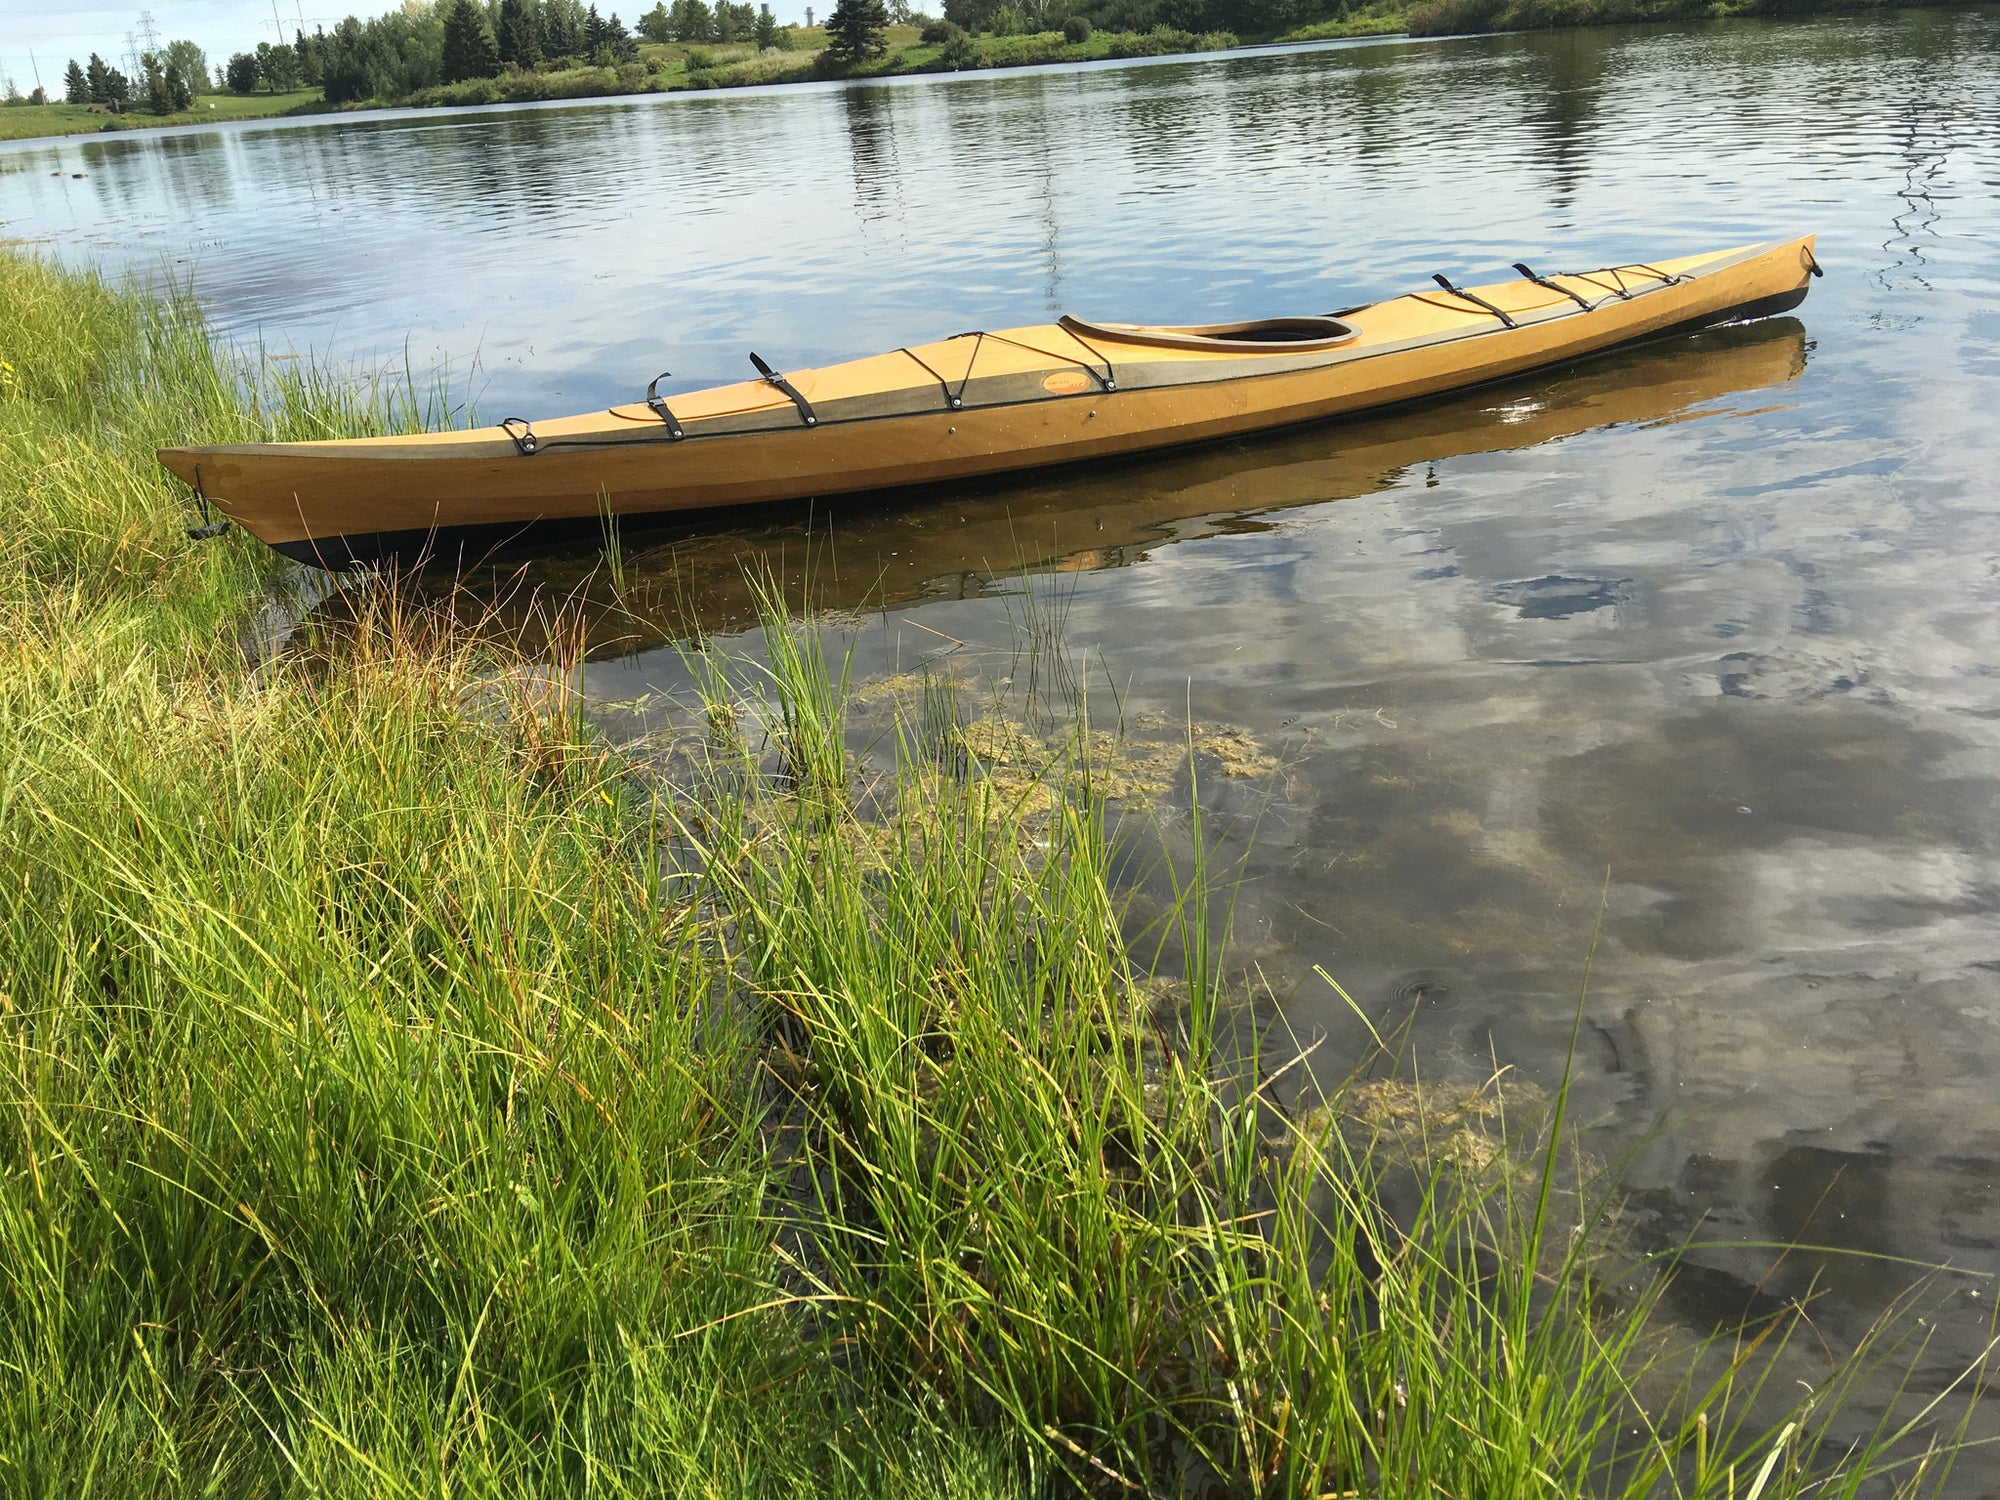 Solace 16XL Kayak in lake side profile